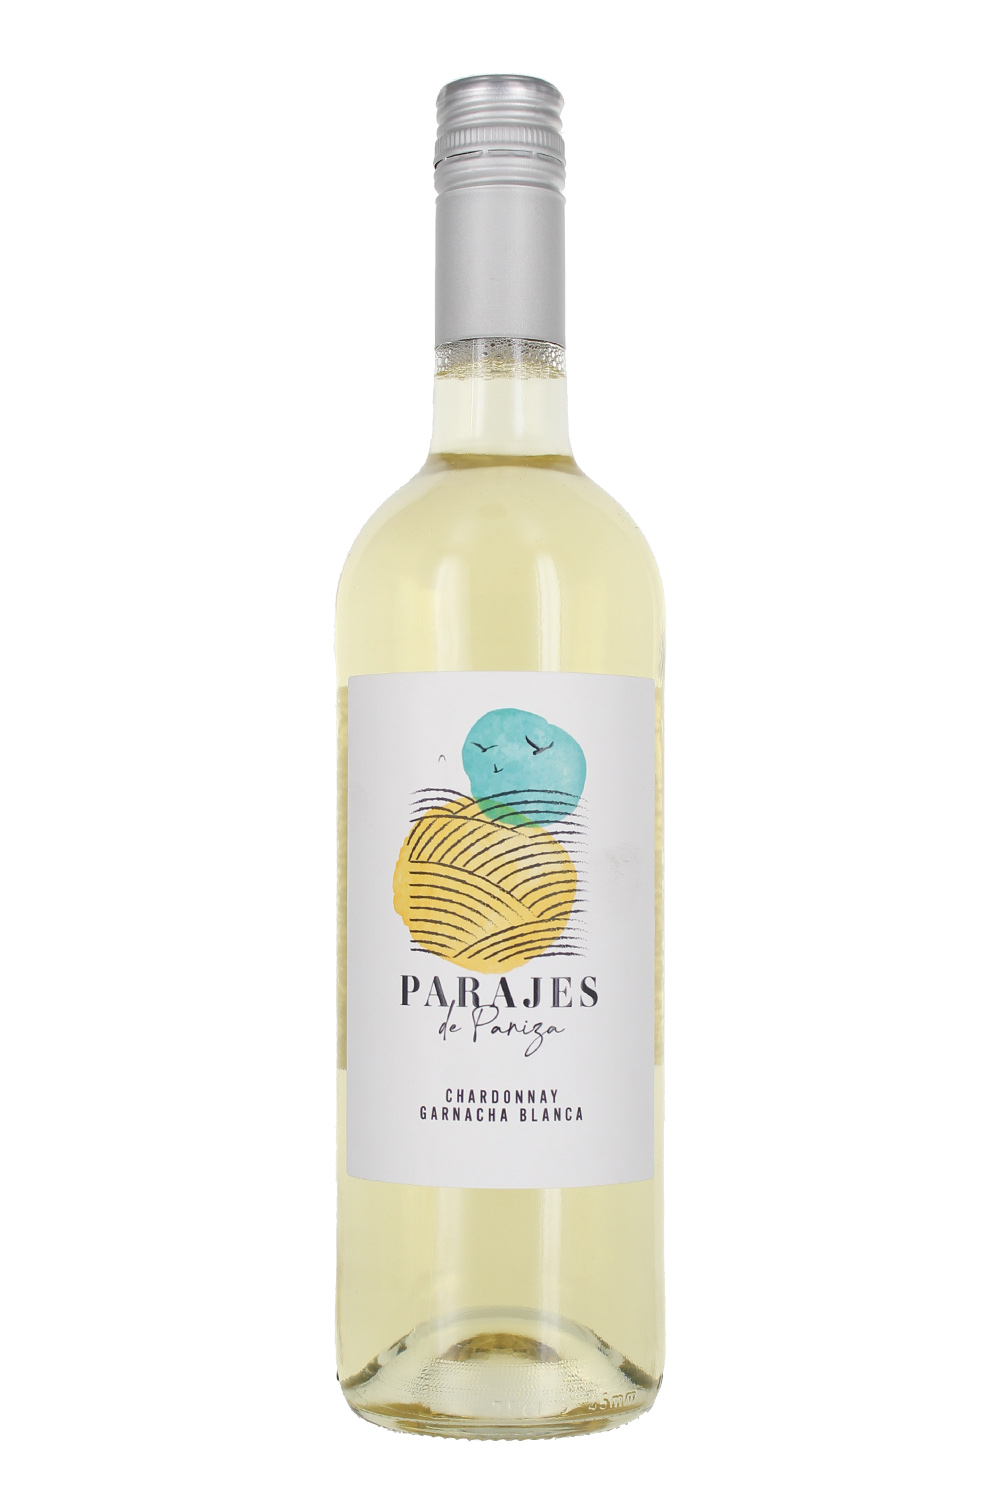 Garnacha Paniza Chardonnay de - 2021 Parajes Blanca, Jeroboams